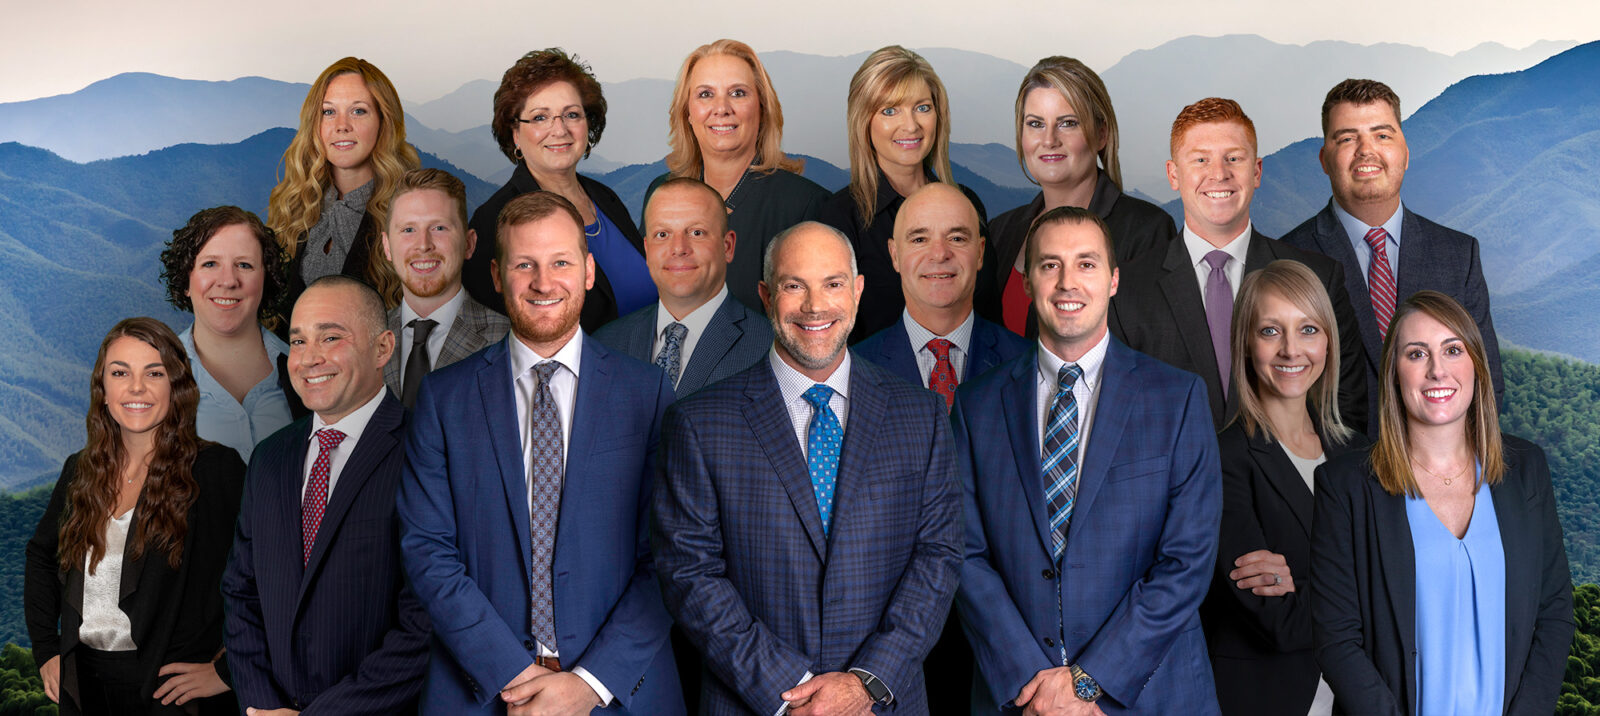 Hall Financial Advisors - Group Photo